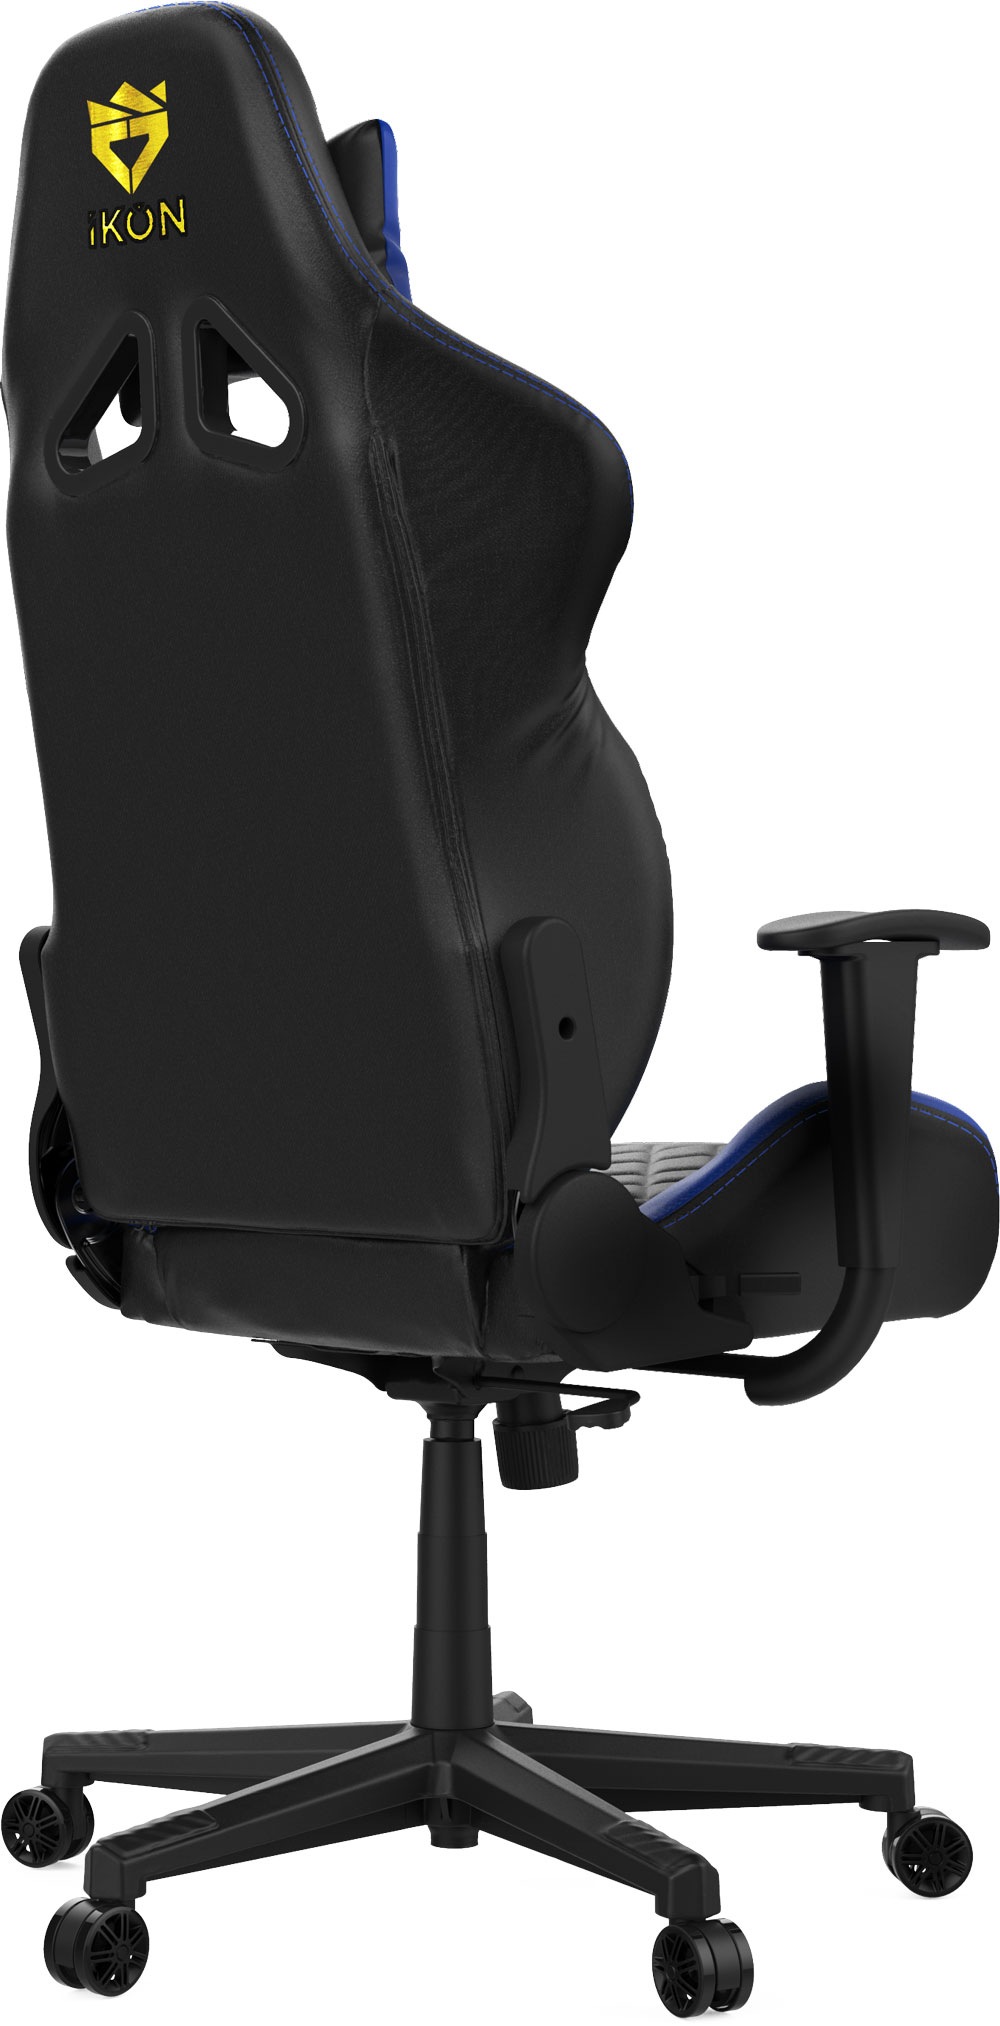 Evetech IKon-Shift-300 Gaming Chair - Black/Blue